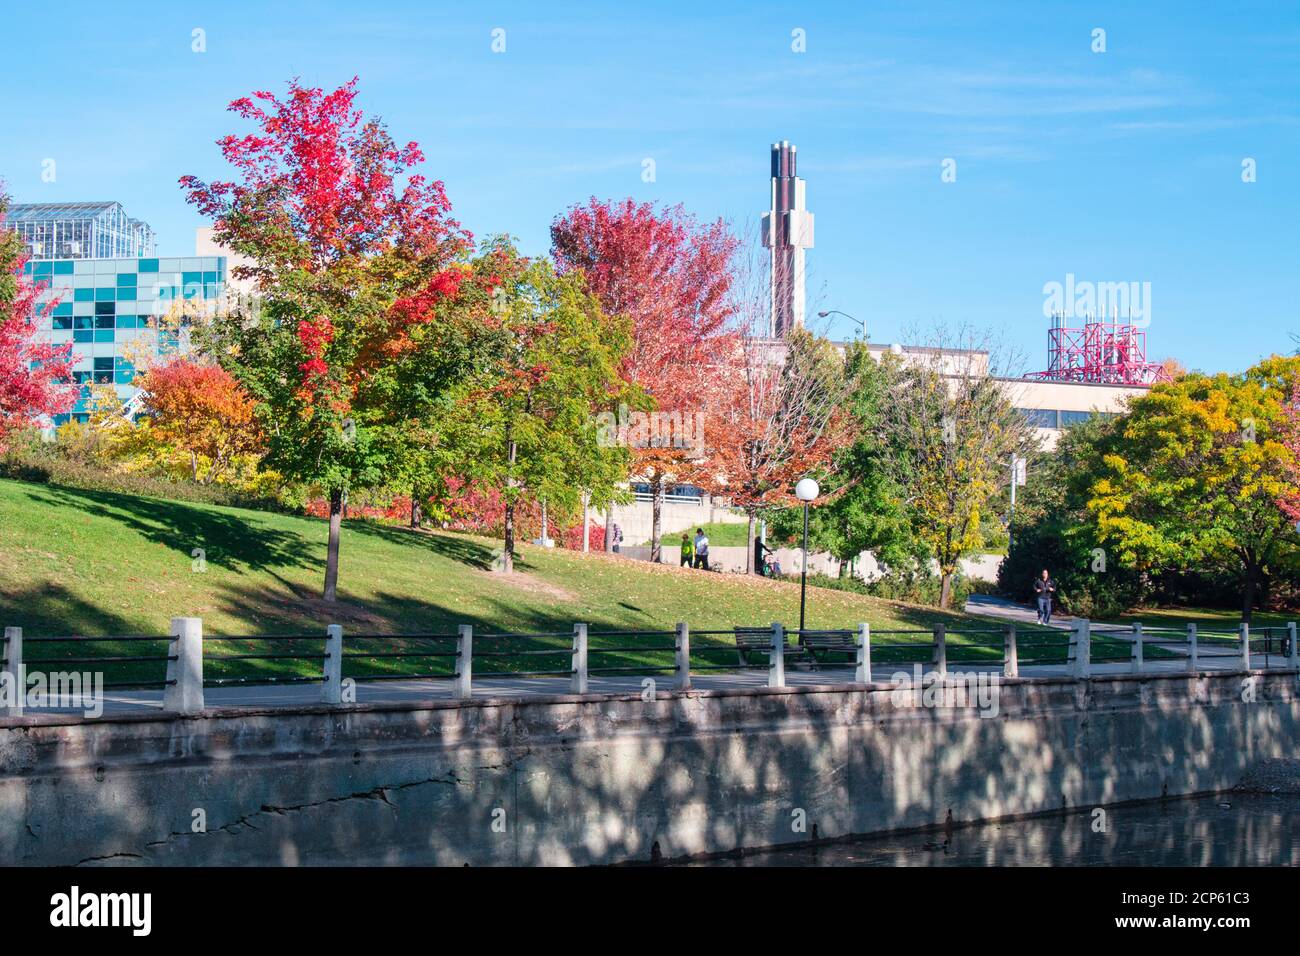 University of Ottawa Campus with autumn foliage near Rideau Canal Eastern Pathway in Ottawa, Ontario, Canada Stock Photo